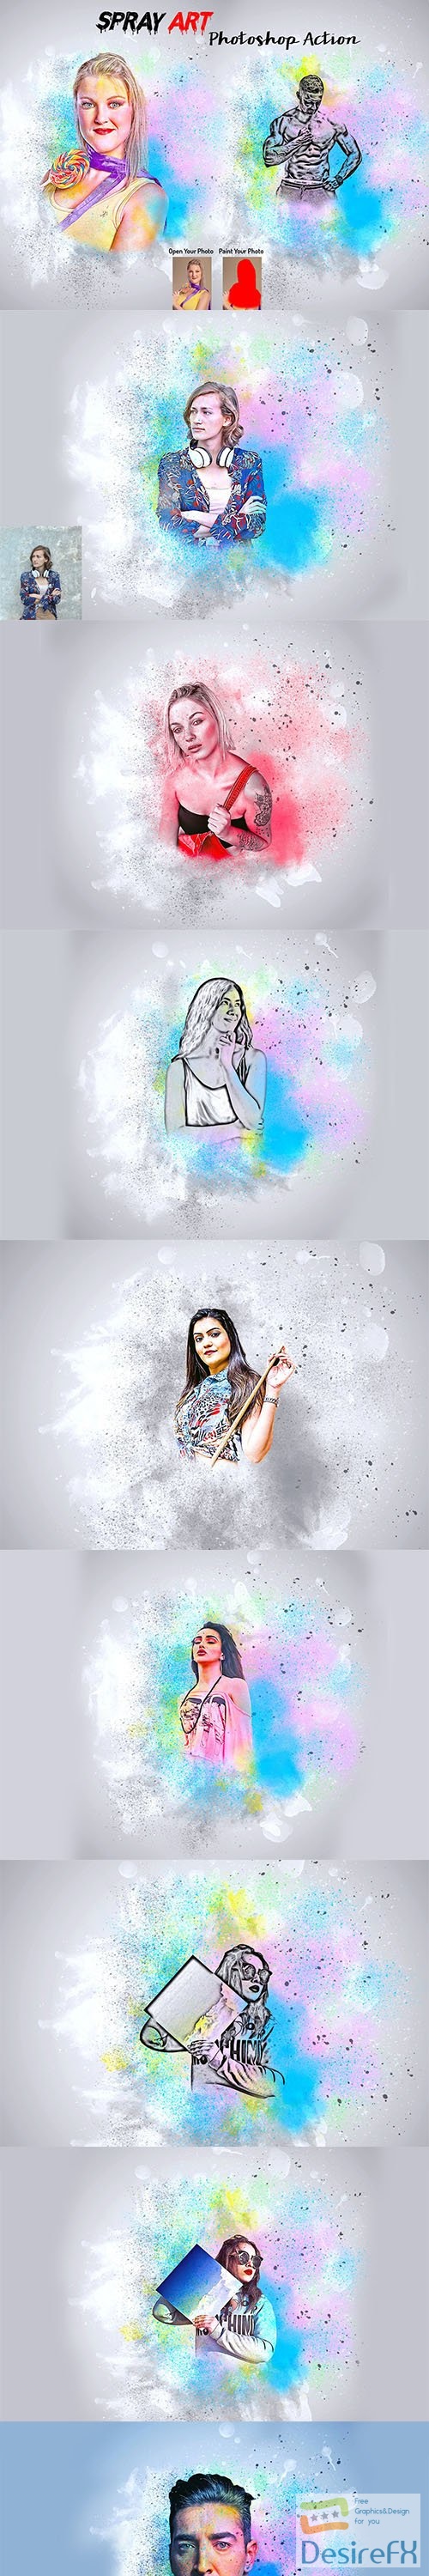 CreativeMarket - Spray Art Photoshop Action 5988838